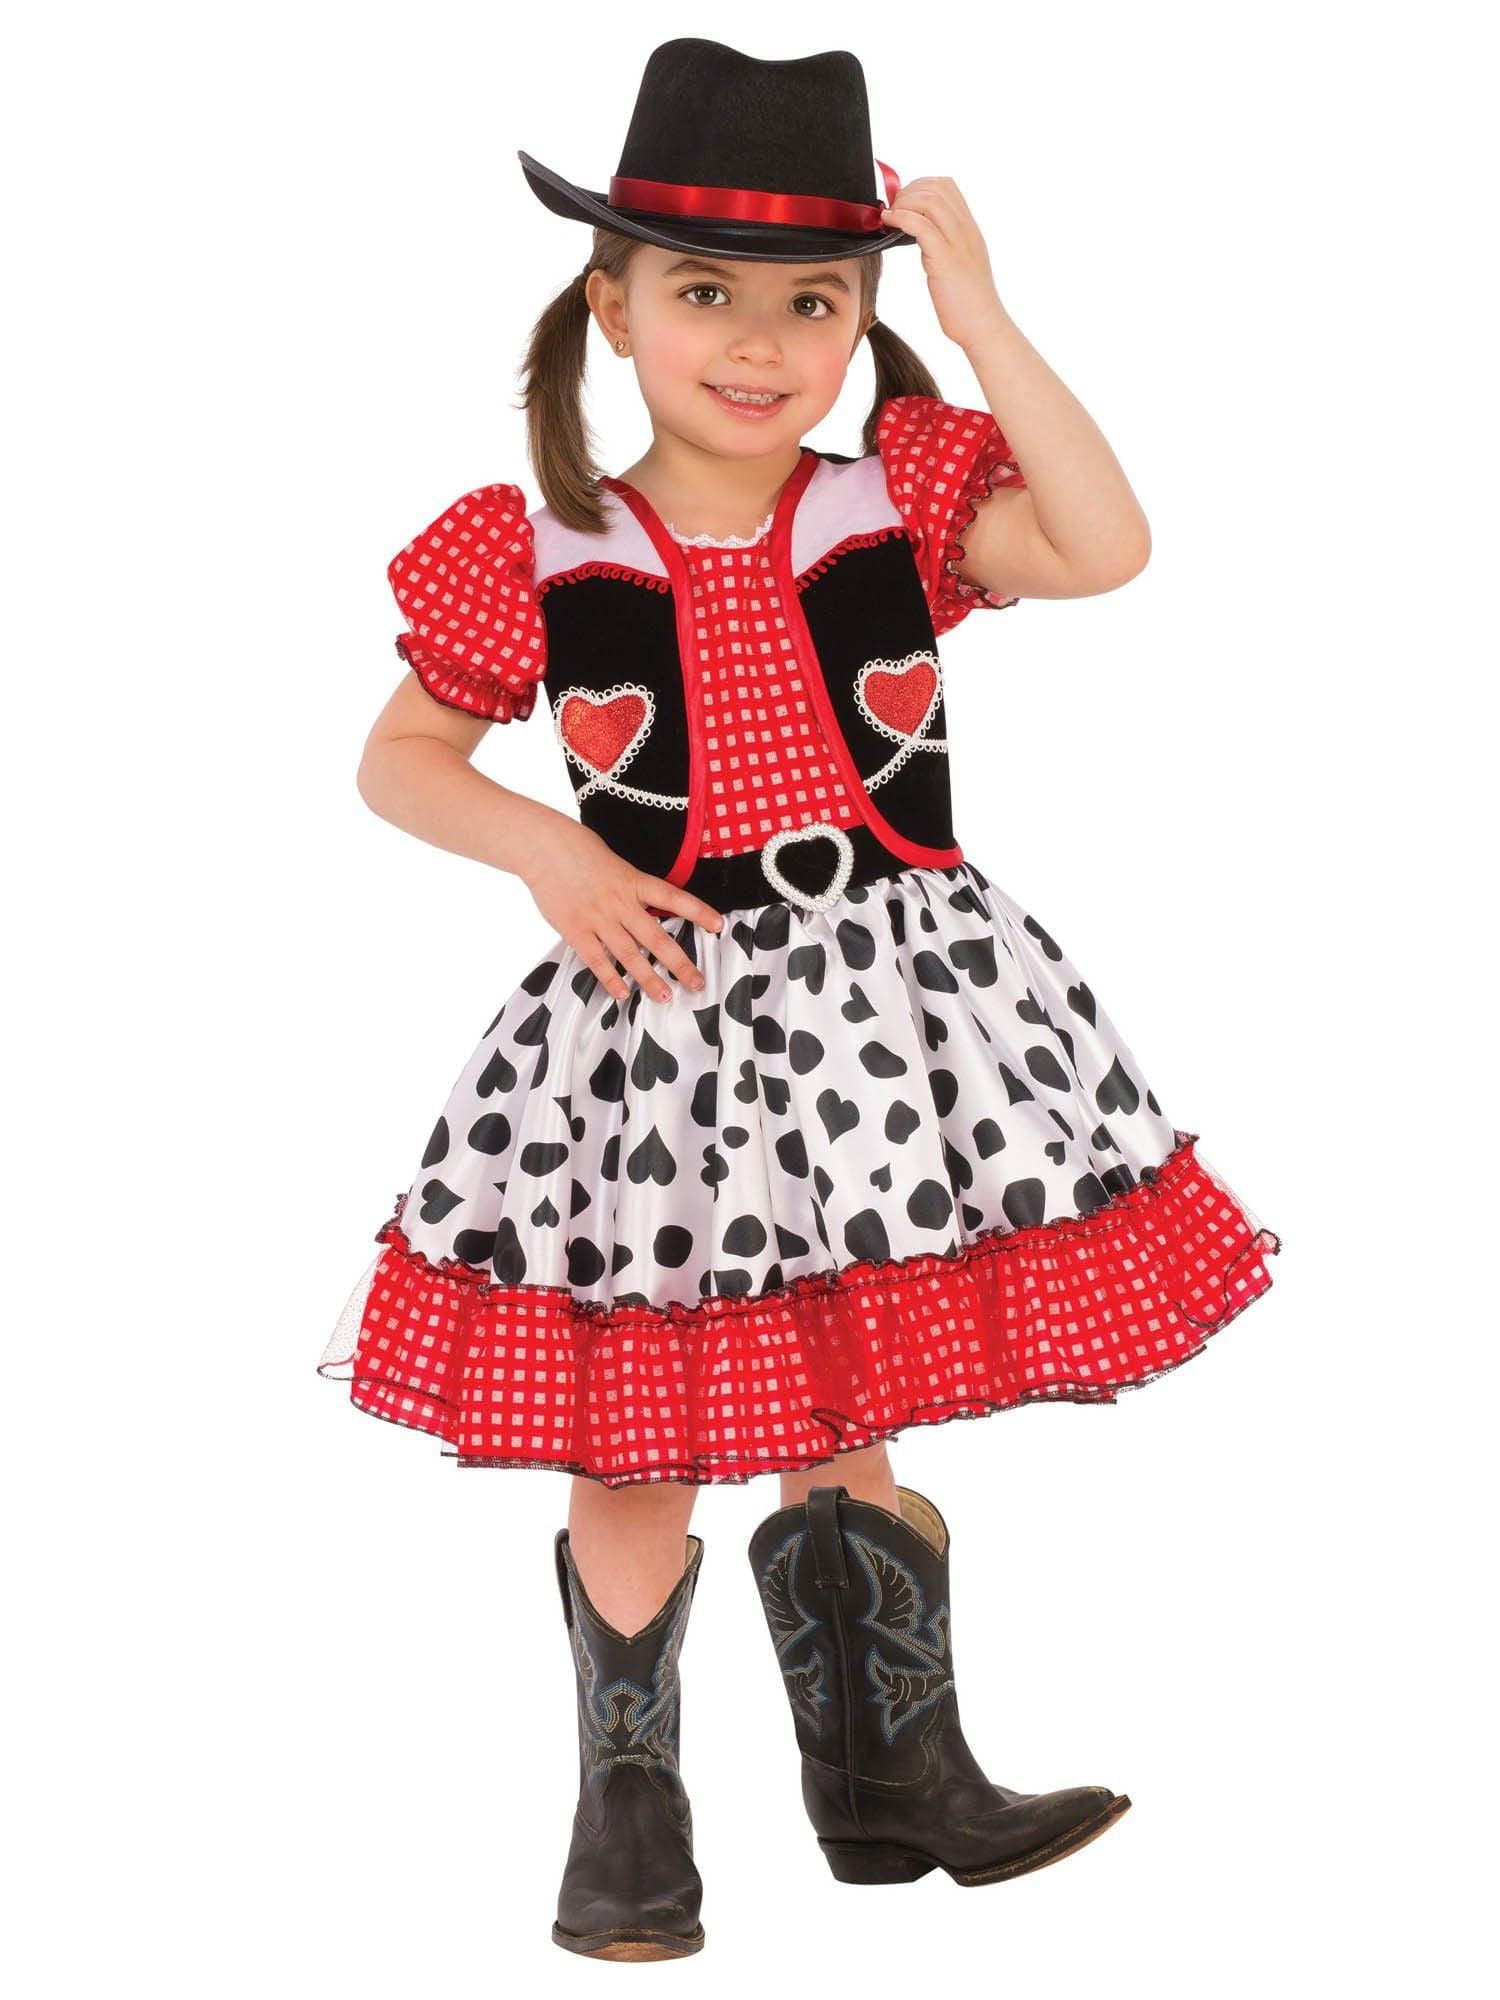 Kids Cowgirl Costume - costumes.com